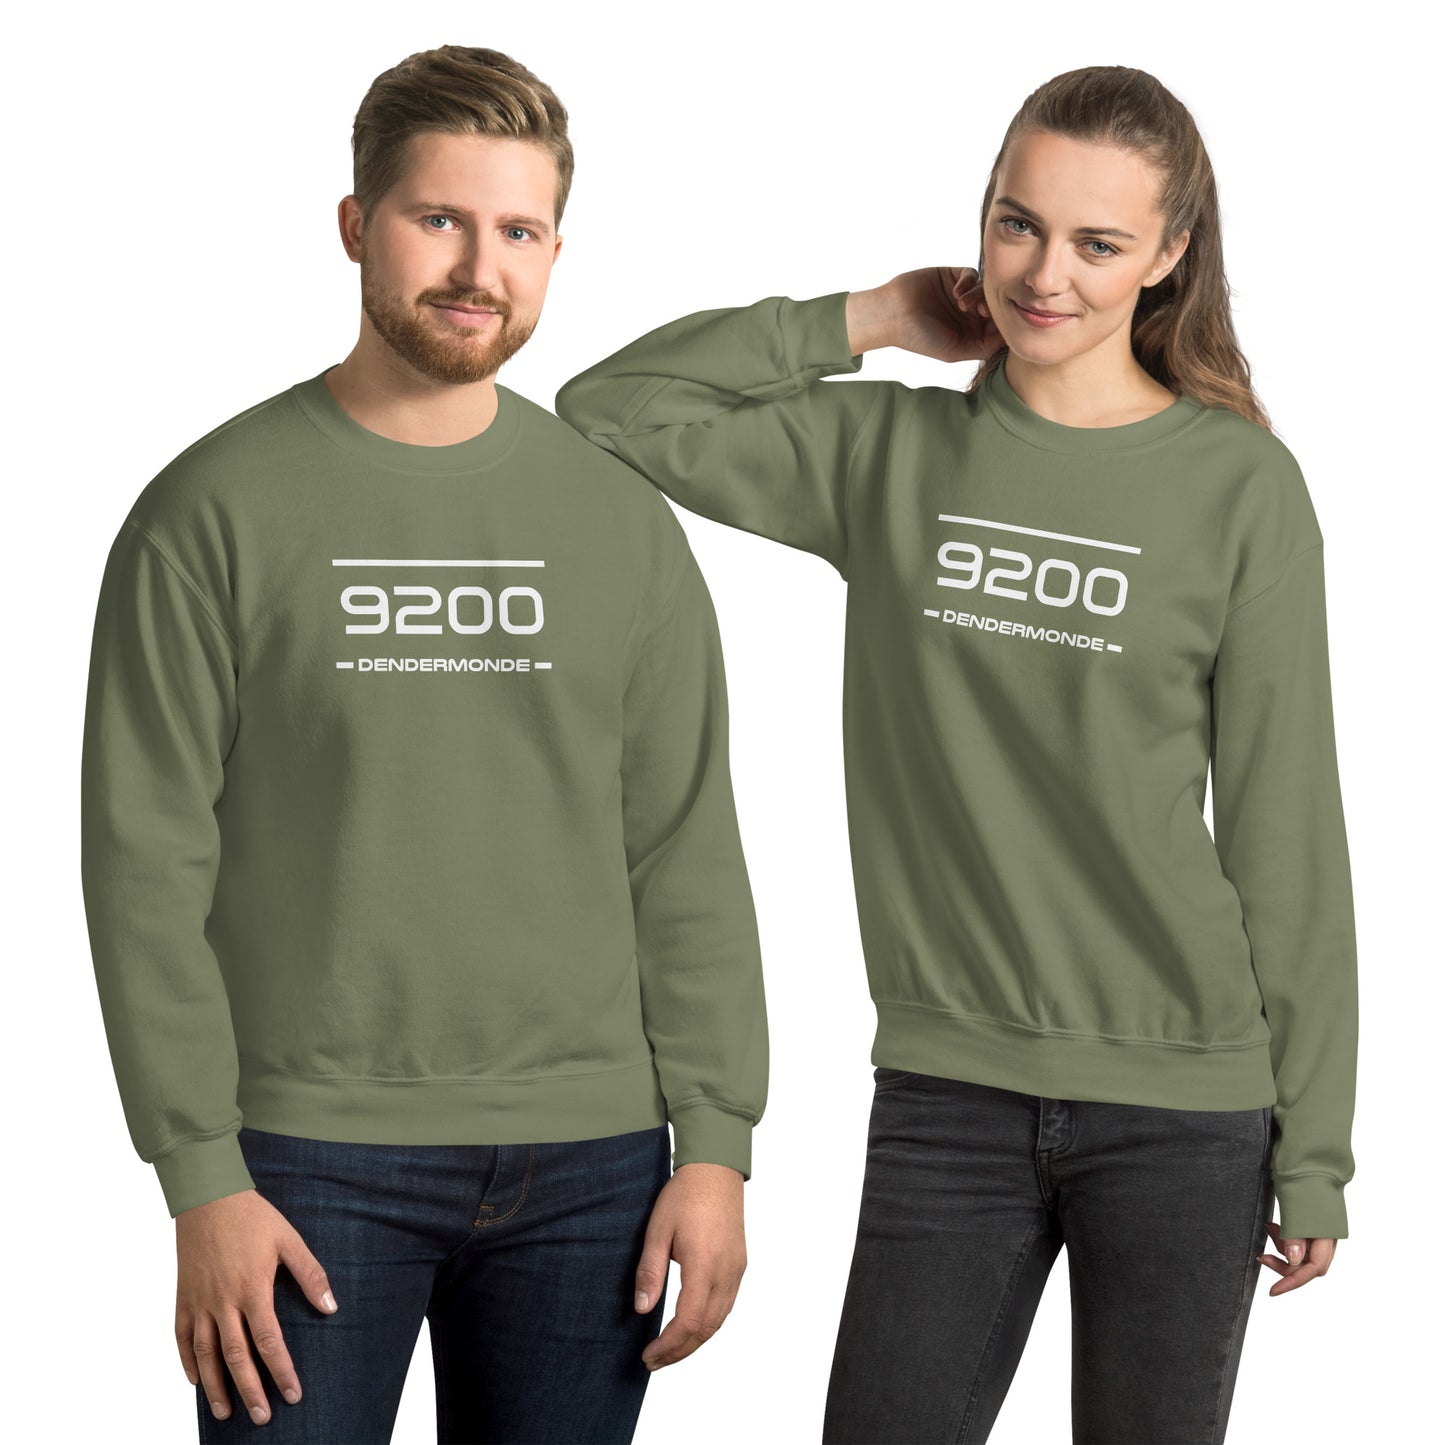 Sweater - 9200 - Dendermonde (M/V)